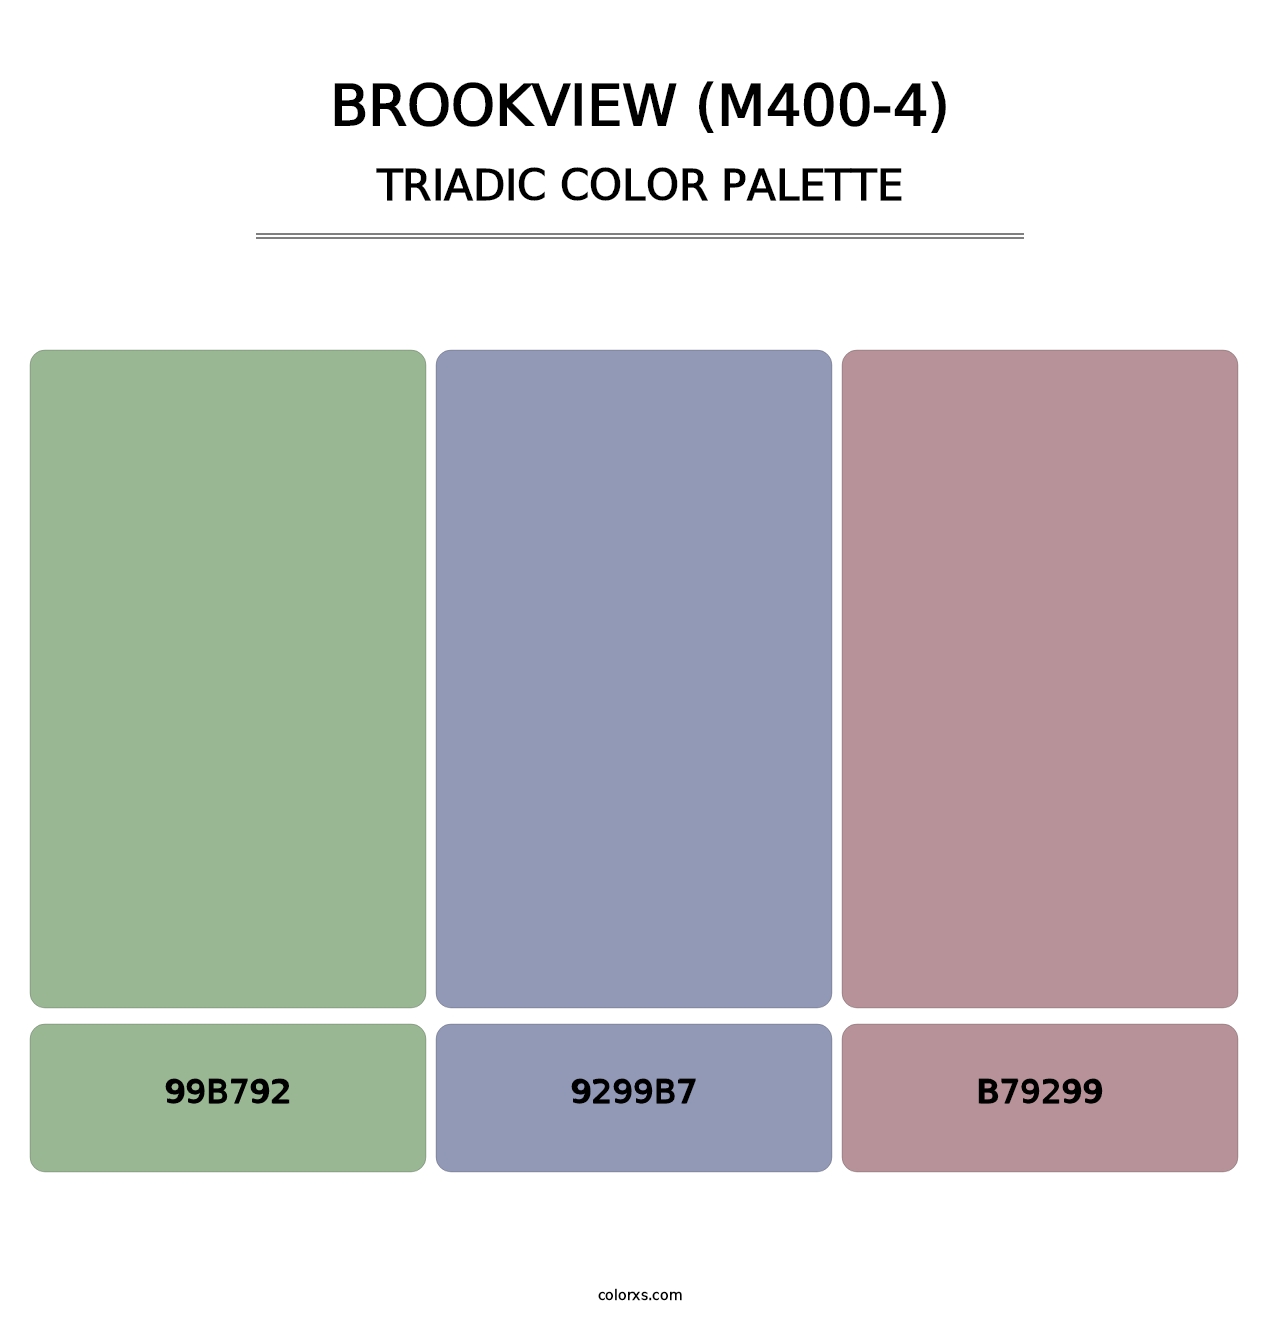 Brookview (M400-4) - Triadic Color Palette